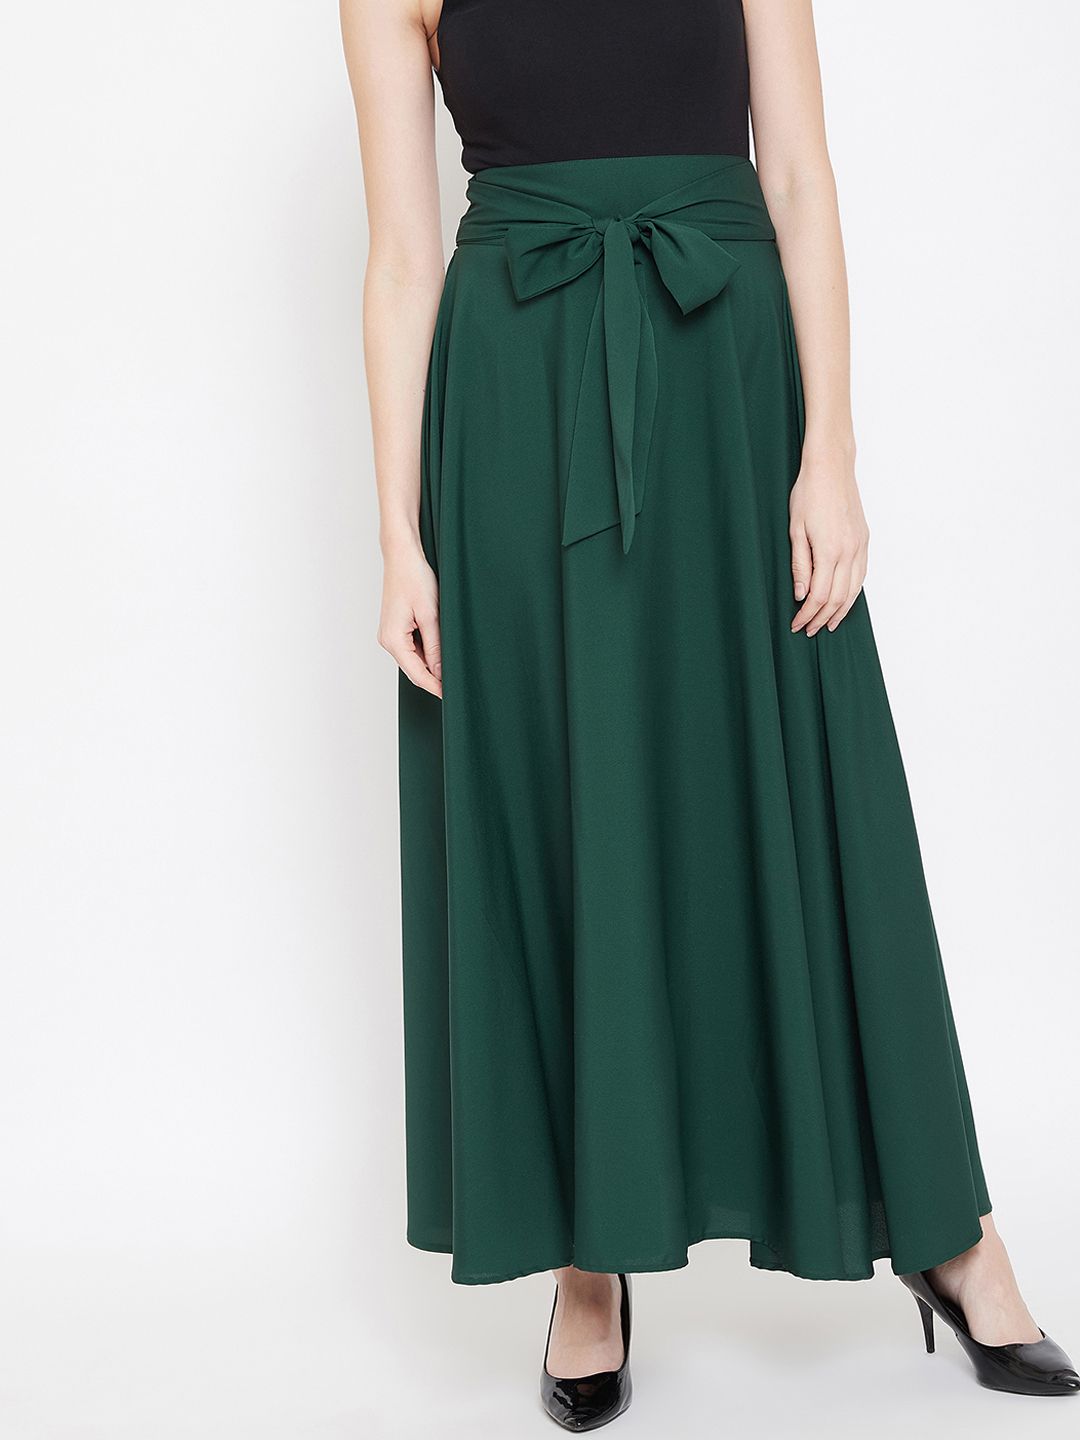 Berrylush Green Bow Tie Waist Flared Maxi Skirt Price in India